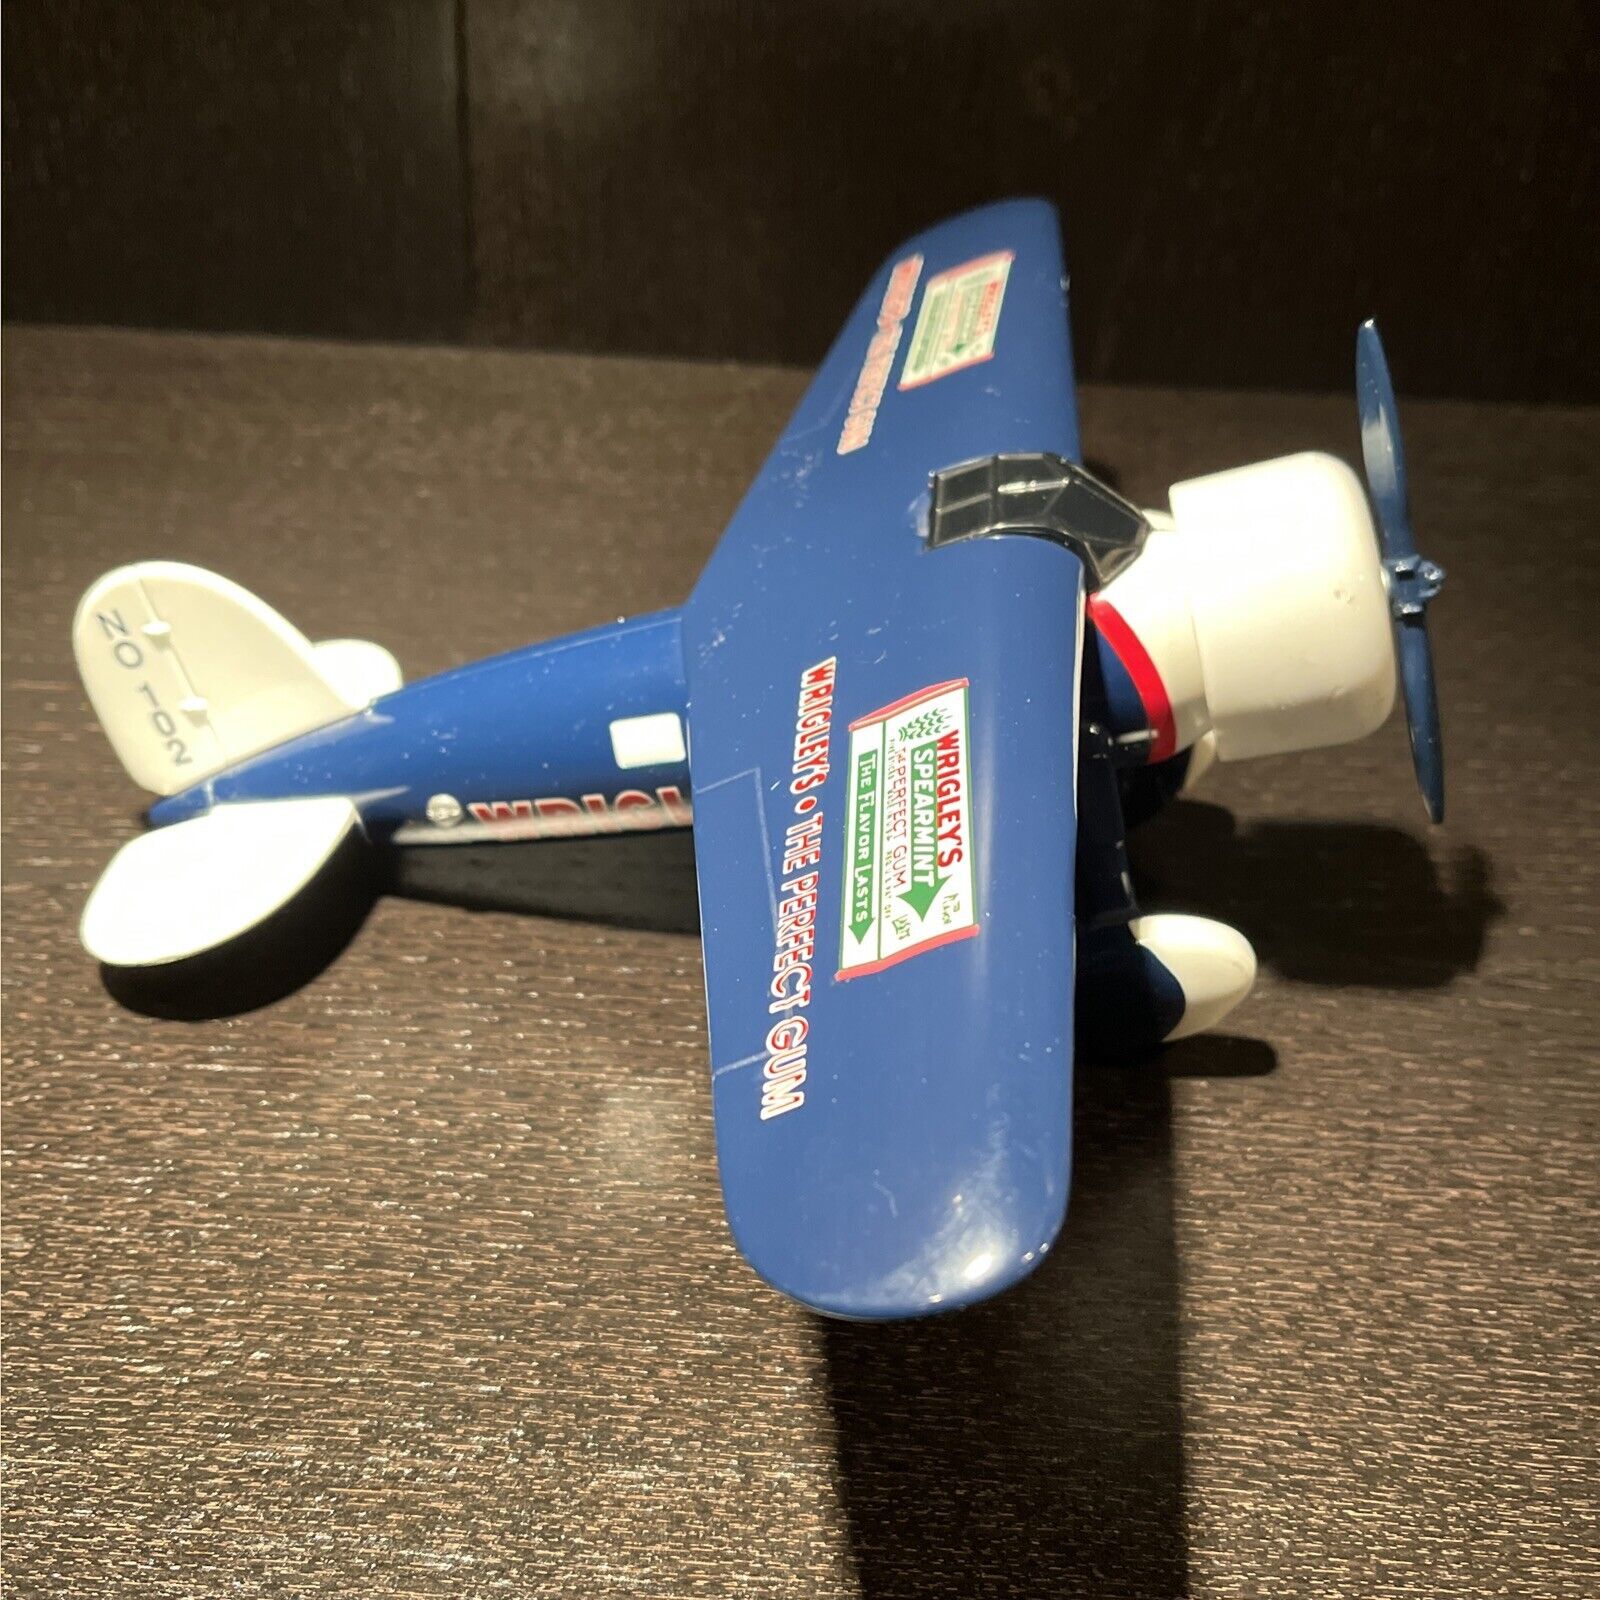 Wrigley\'s Spearmint Gum Diecast Vega Airplane Liberty Classic Limited Edition 11